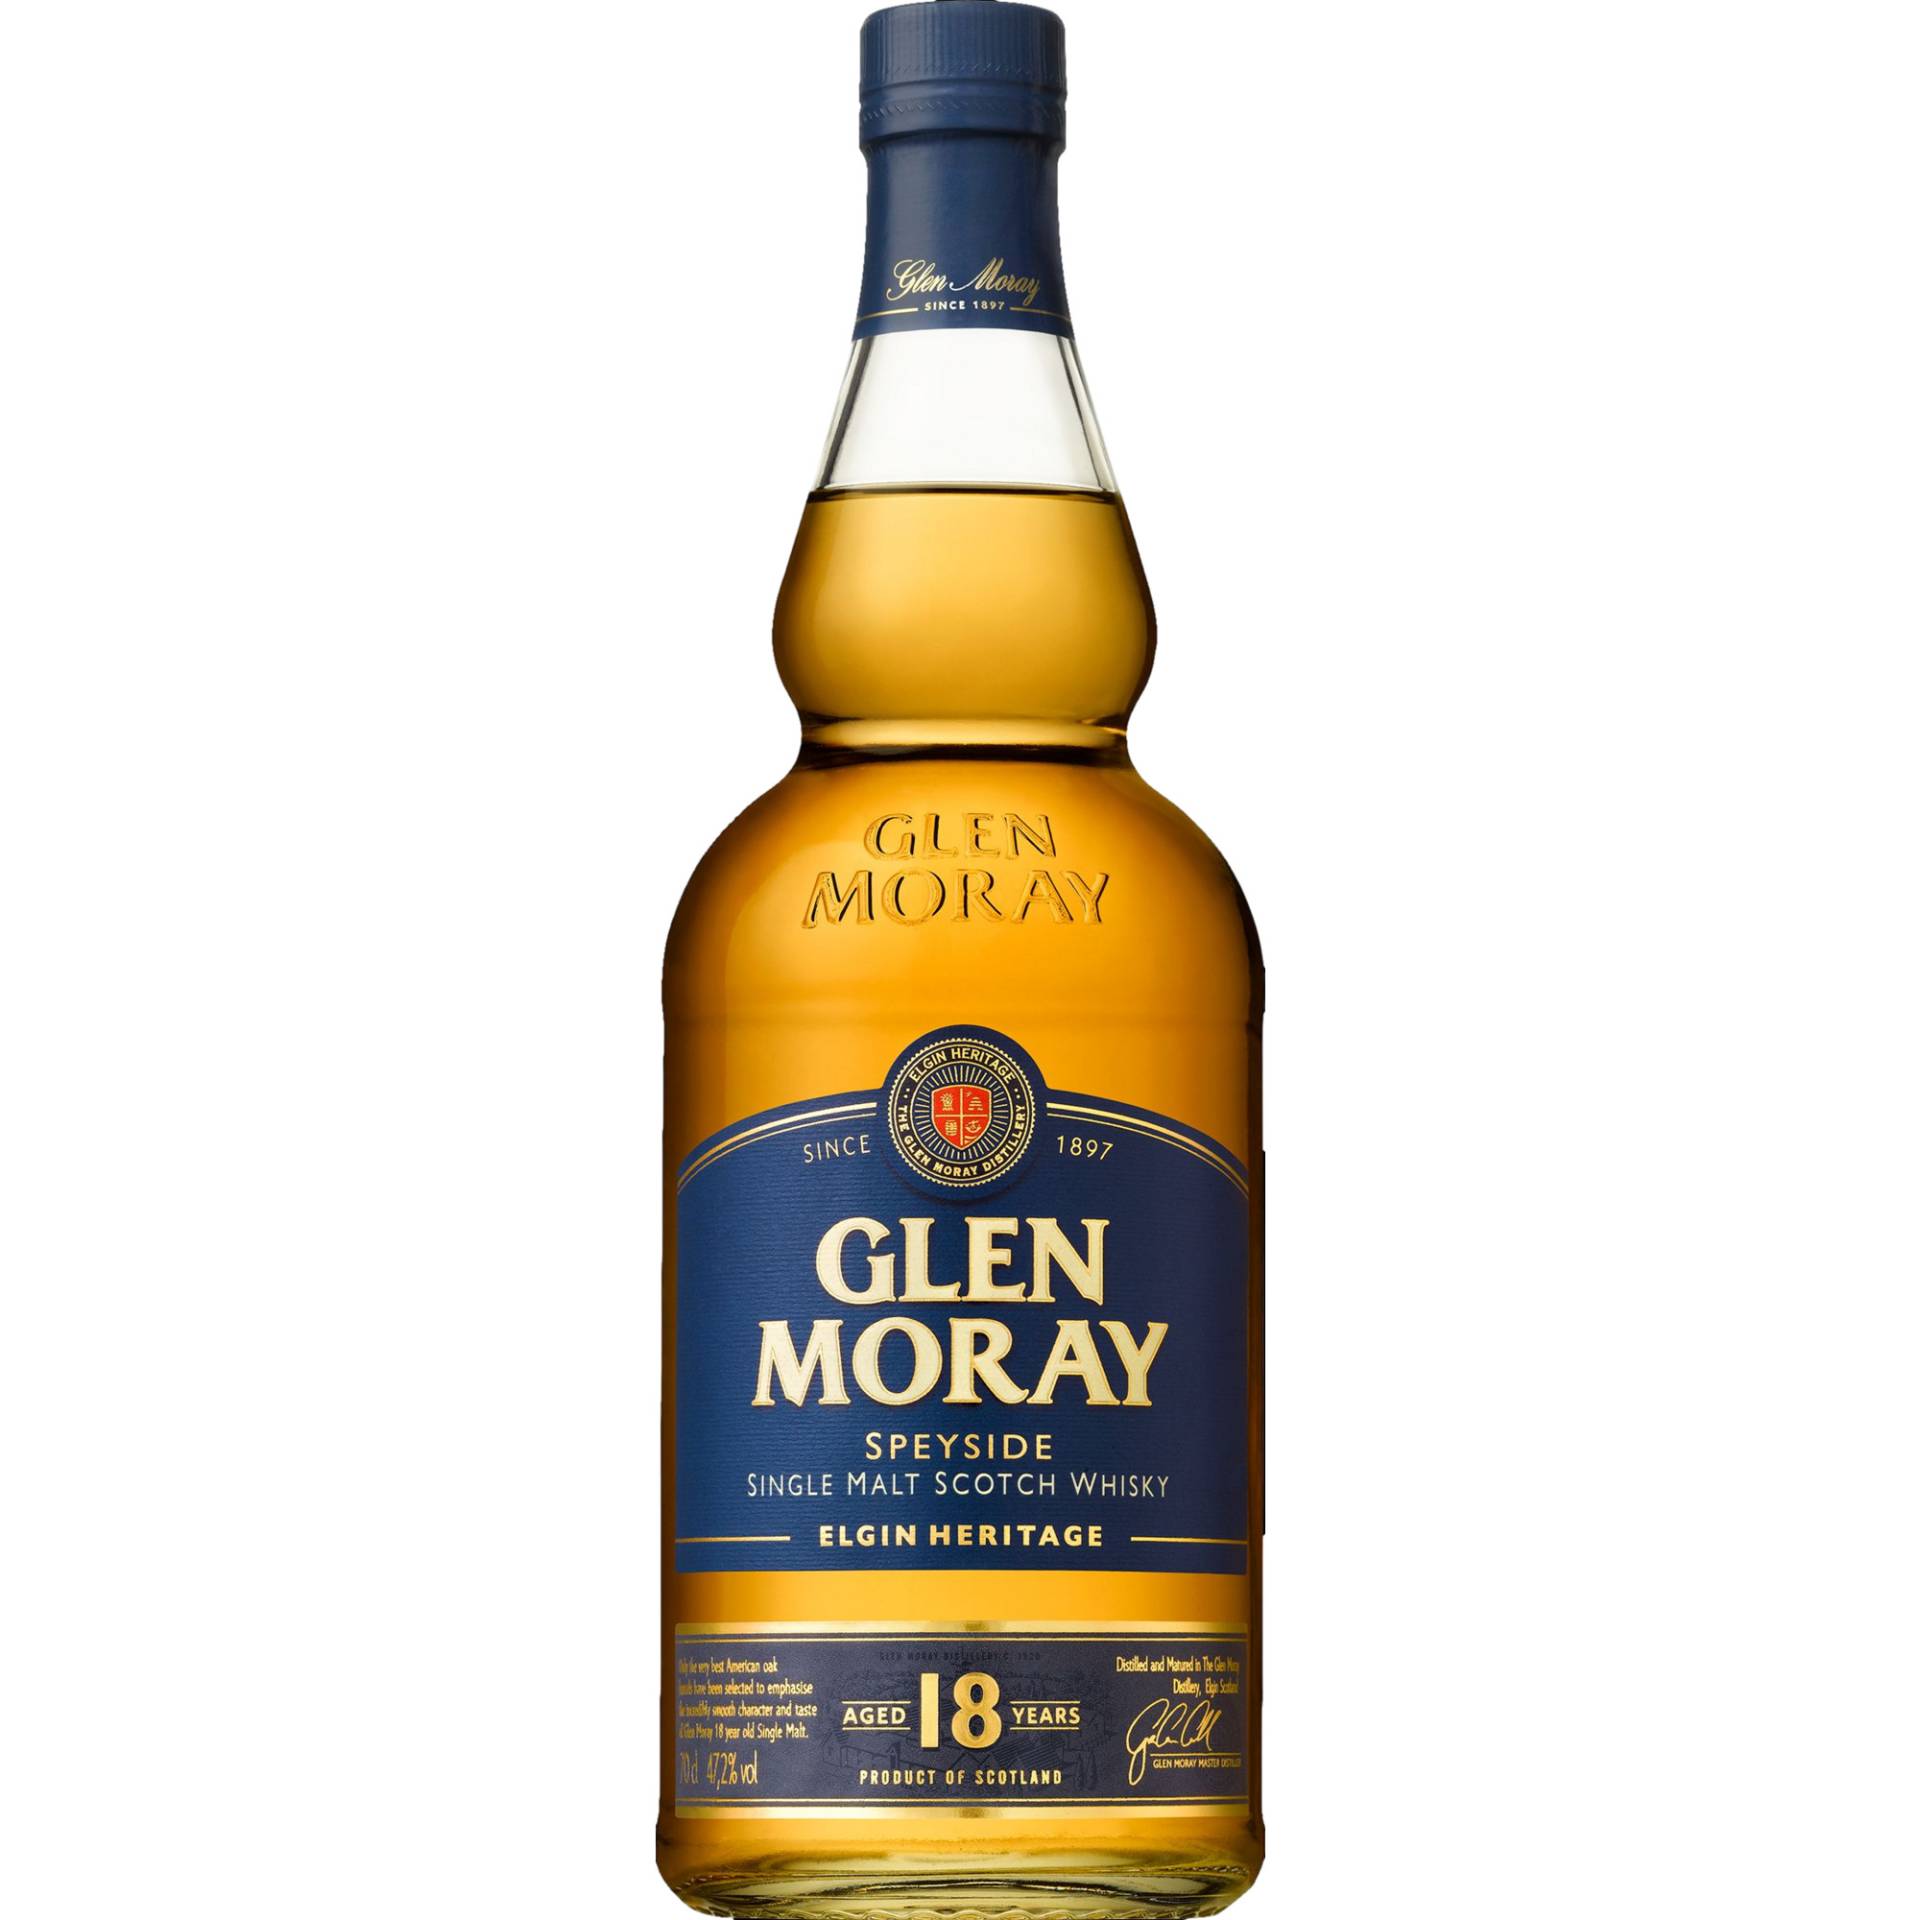 Glen Moray 18 Years Speyside Single Malt, Scotch, 47,2% Vol, 0,7 L, Spirituosen von Glen Moray Customer Service Société des Vins et Spiritueux LM 94220 Charenton France